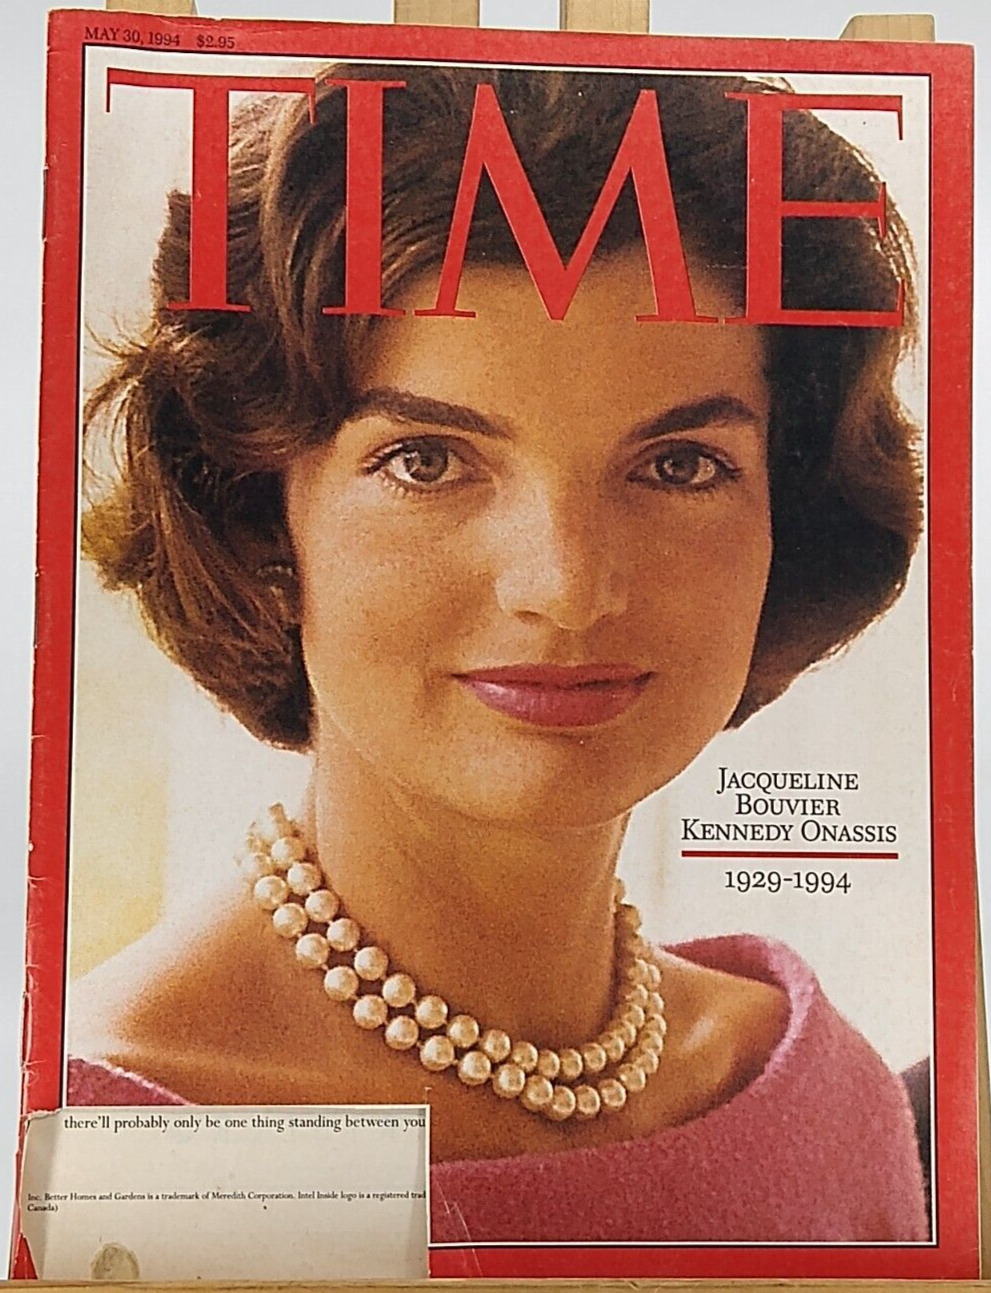 Time Magazine Jacqueline Bouvier Kennedy Onassis (1929-1994)